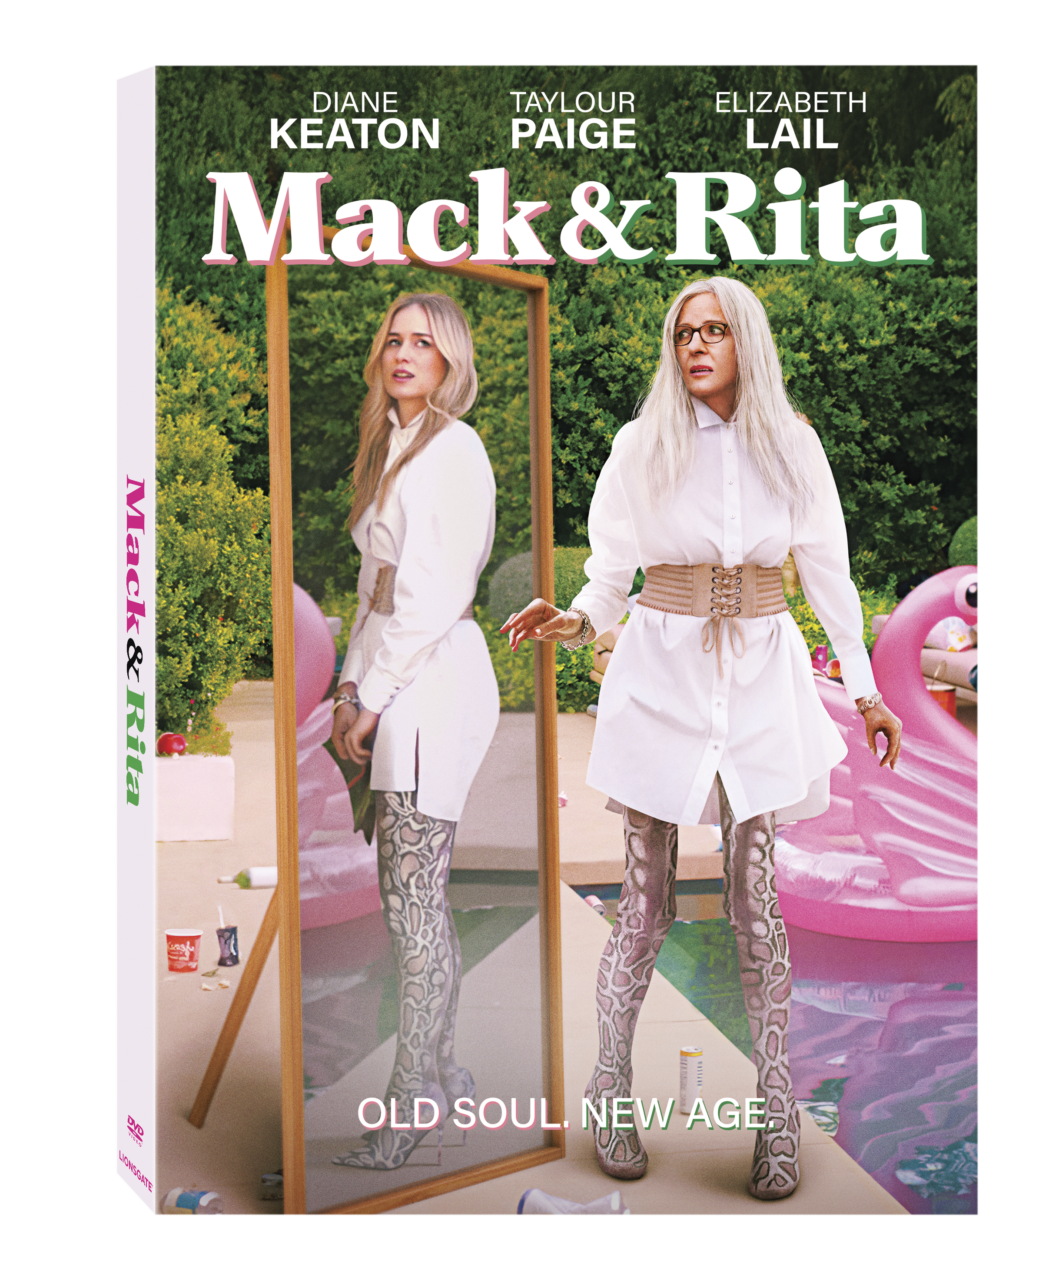 Mack And Rita DVD cover (Lionsgate)